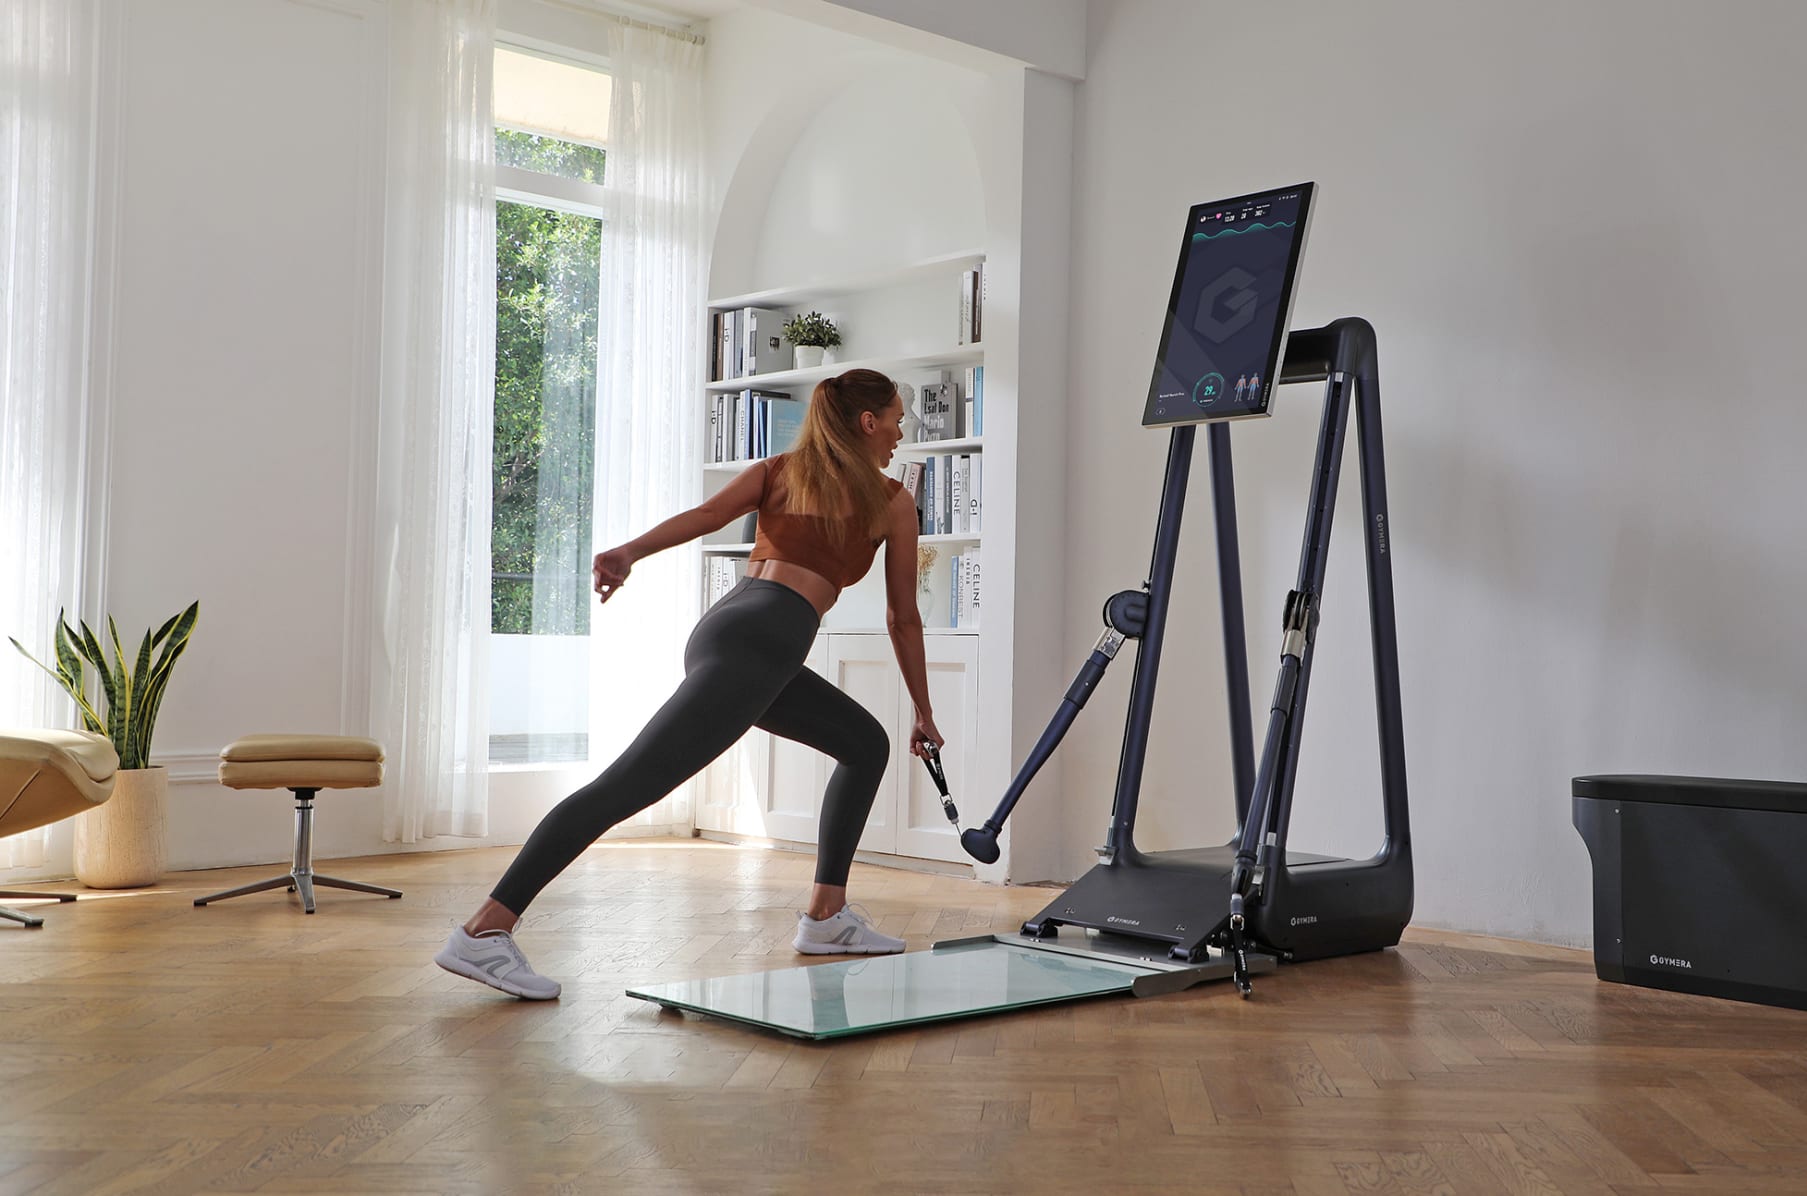 Gymera: First Moveable Playful AI Home Gym